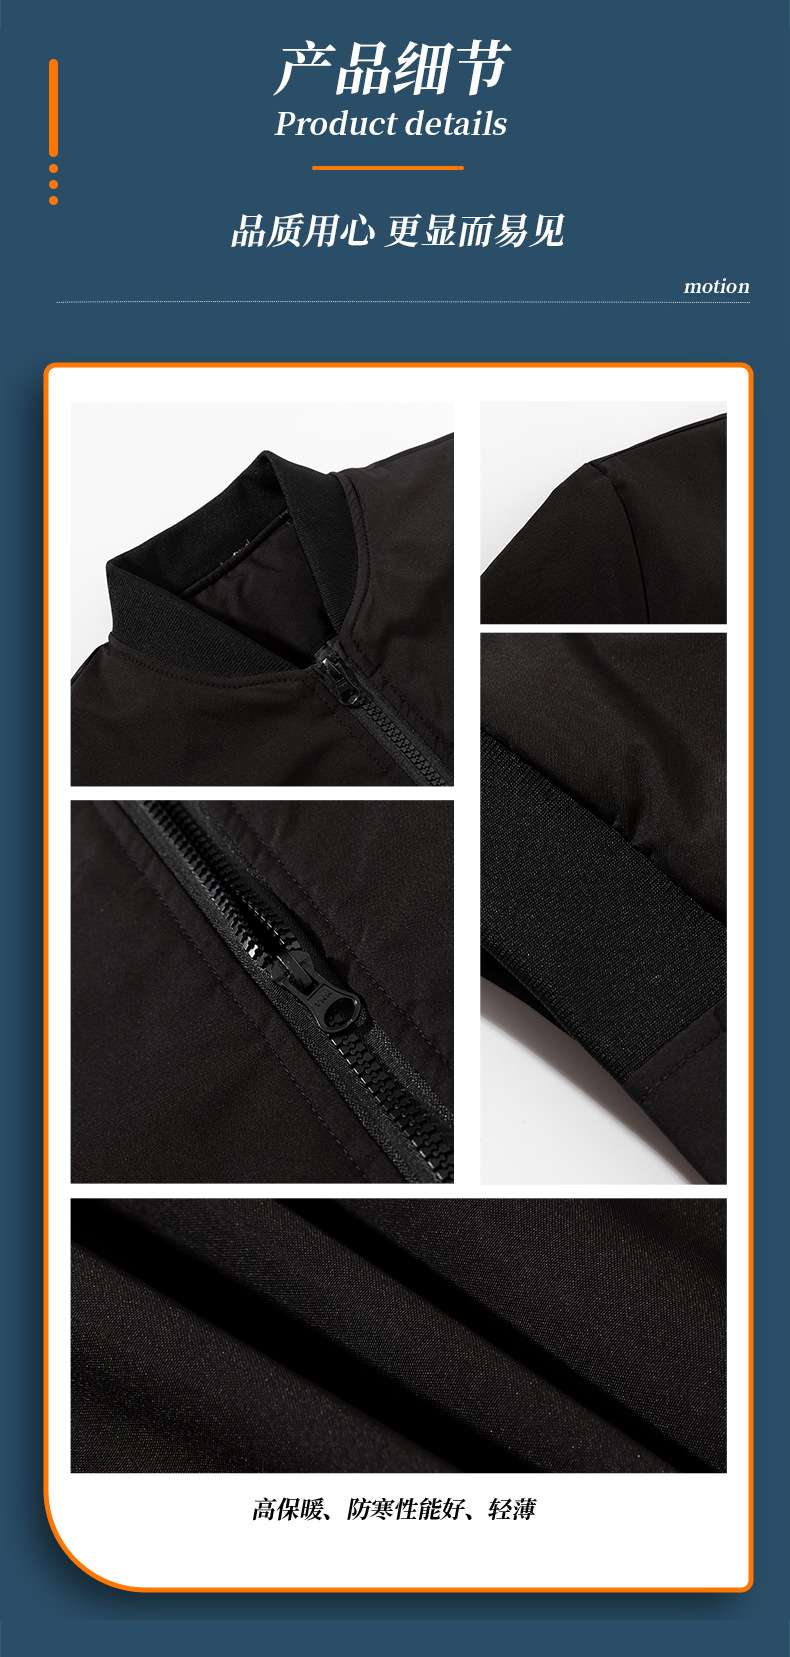 Wholesale windproof waterproof waterproof down leather jacket winter warm large size top coat casual thickened cotton jacket men's models